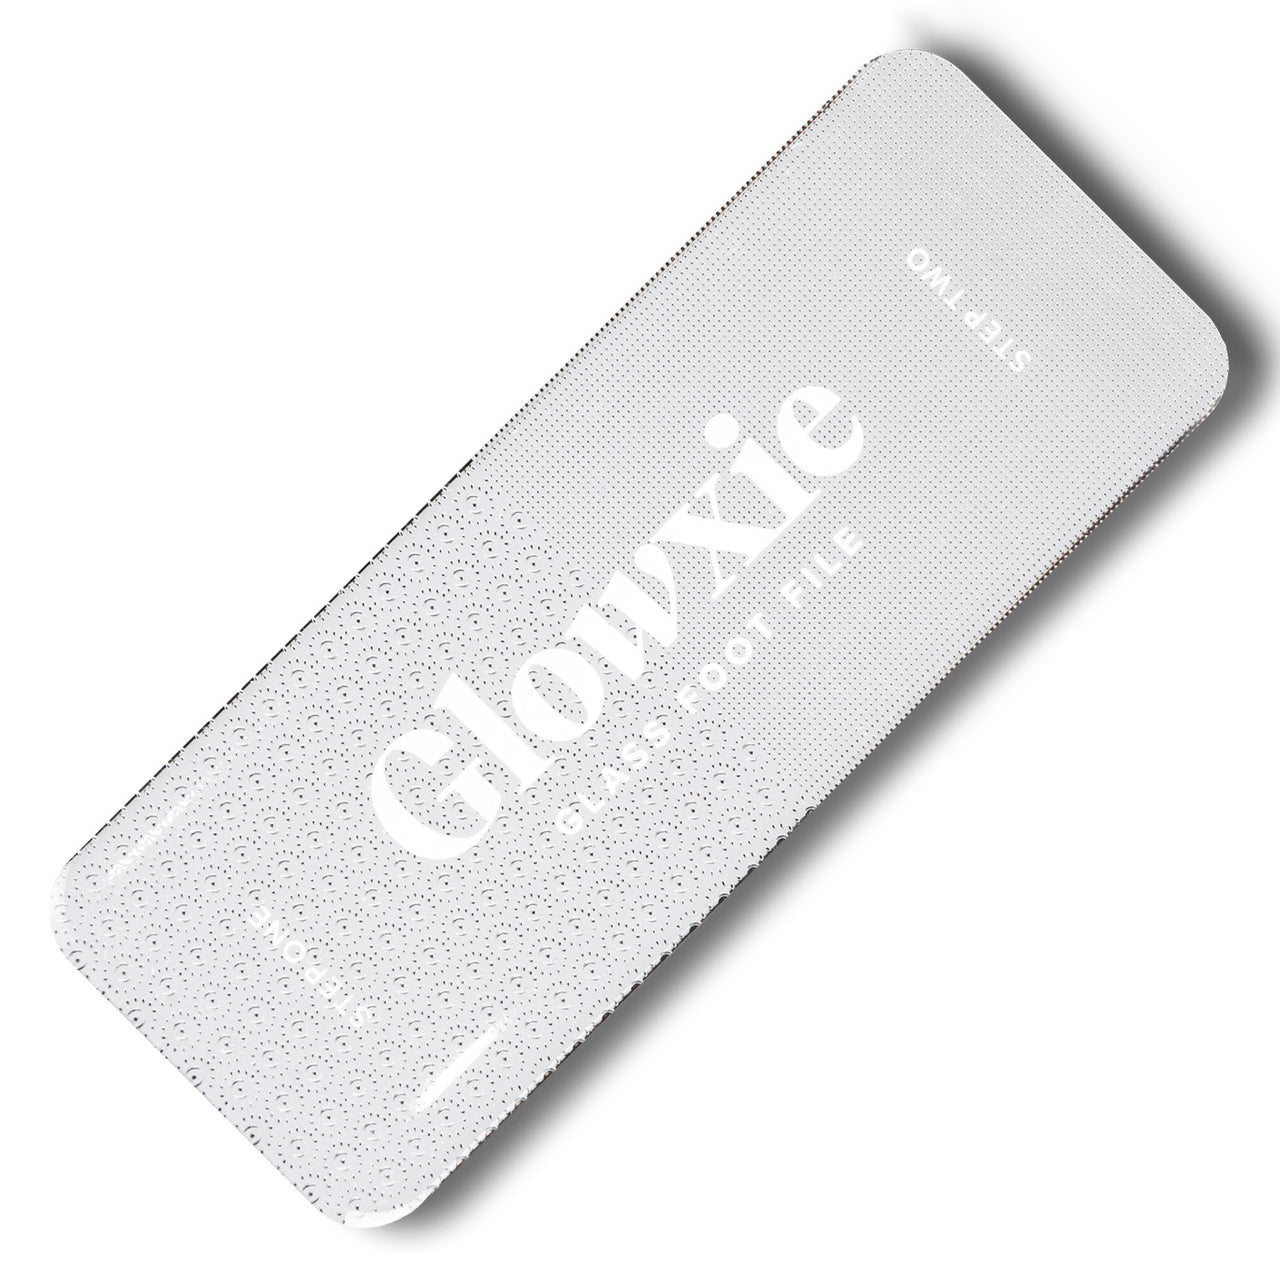 Glowxie XL Glass Foot File